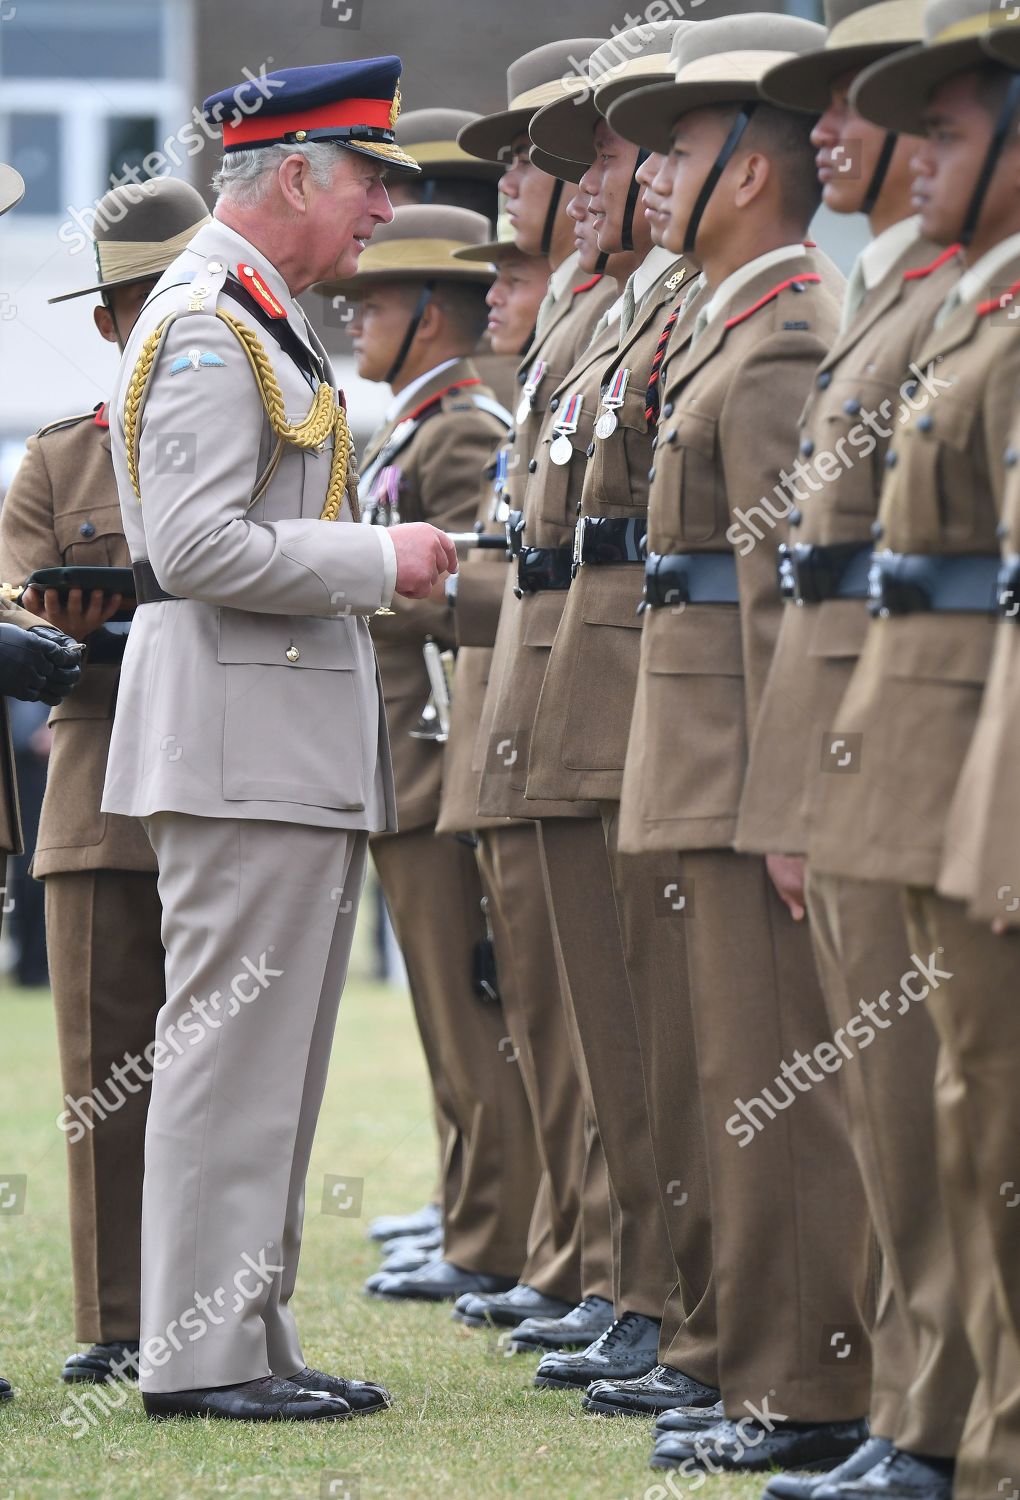 prince-charles-visits-the-1st-battalion-the-royal-gurkha-rifles-sir-john-moore-barracks-shorncliffe-folkestone-kent-uk-shutterstock-editorial-10330864t.jpg